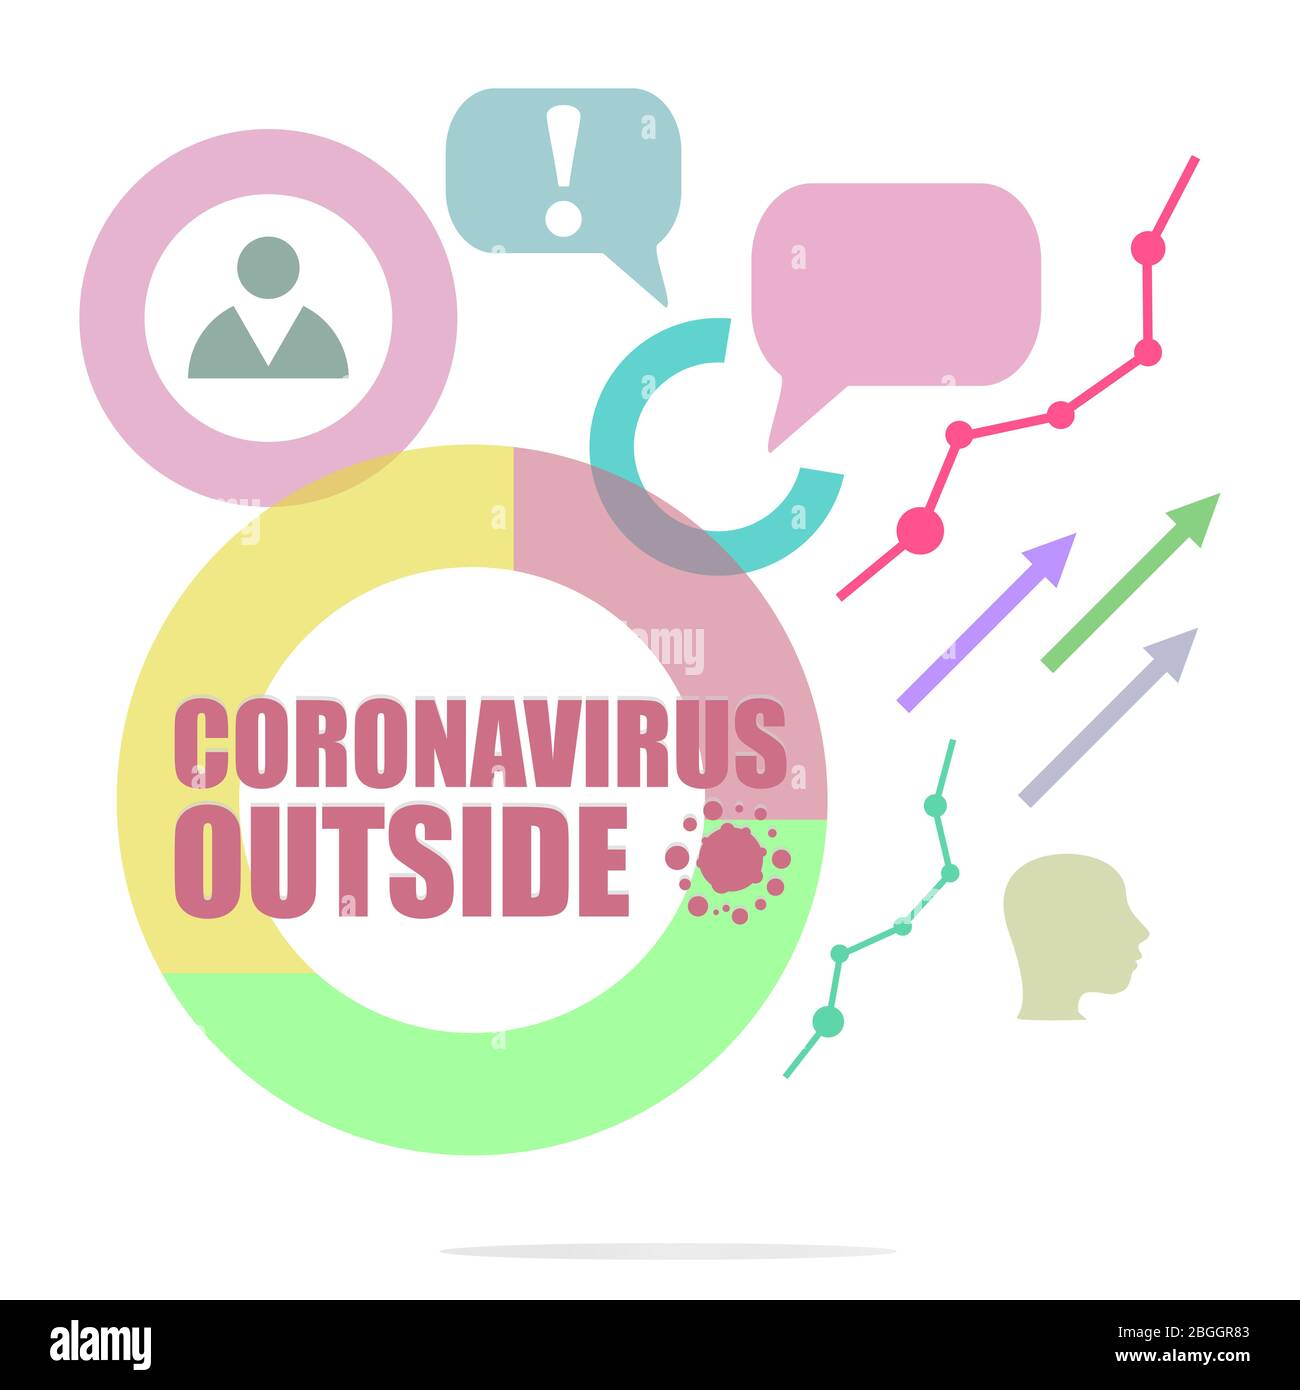 Covid-19 Coronavirus Outside. Pandemic medical concept. Sign caution coronavirus. Stop corona virus Stock Photo